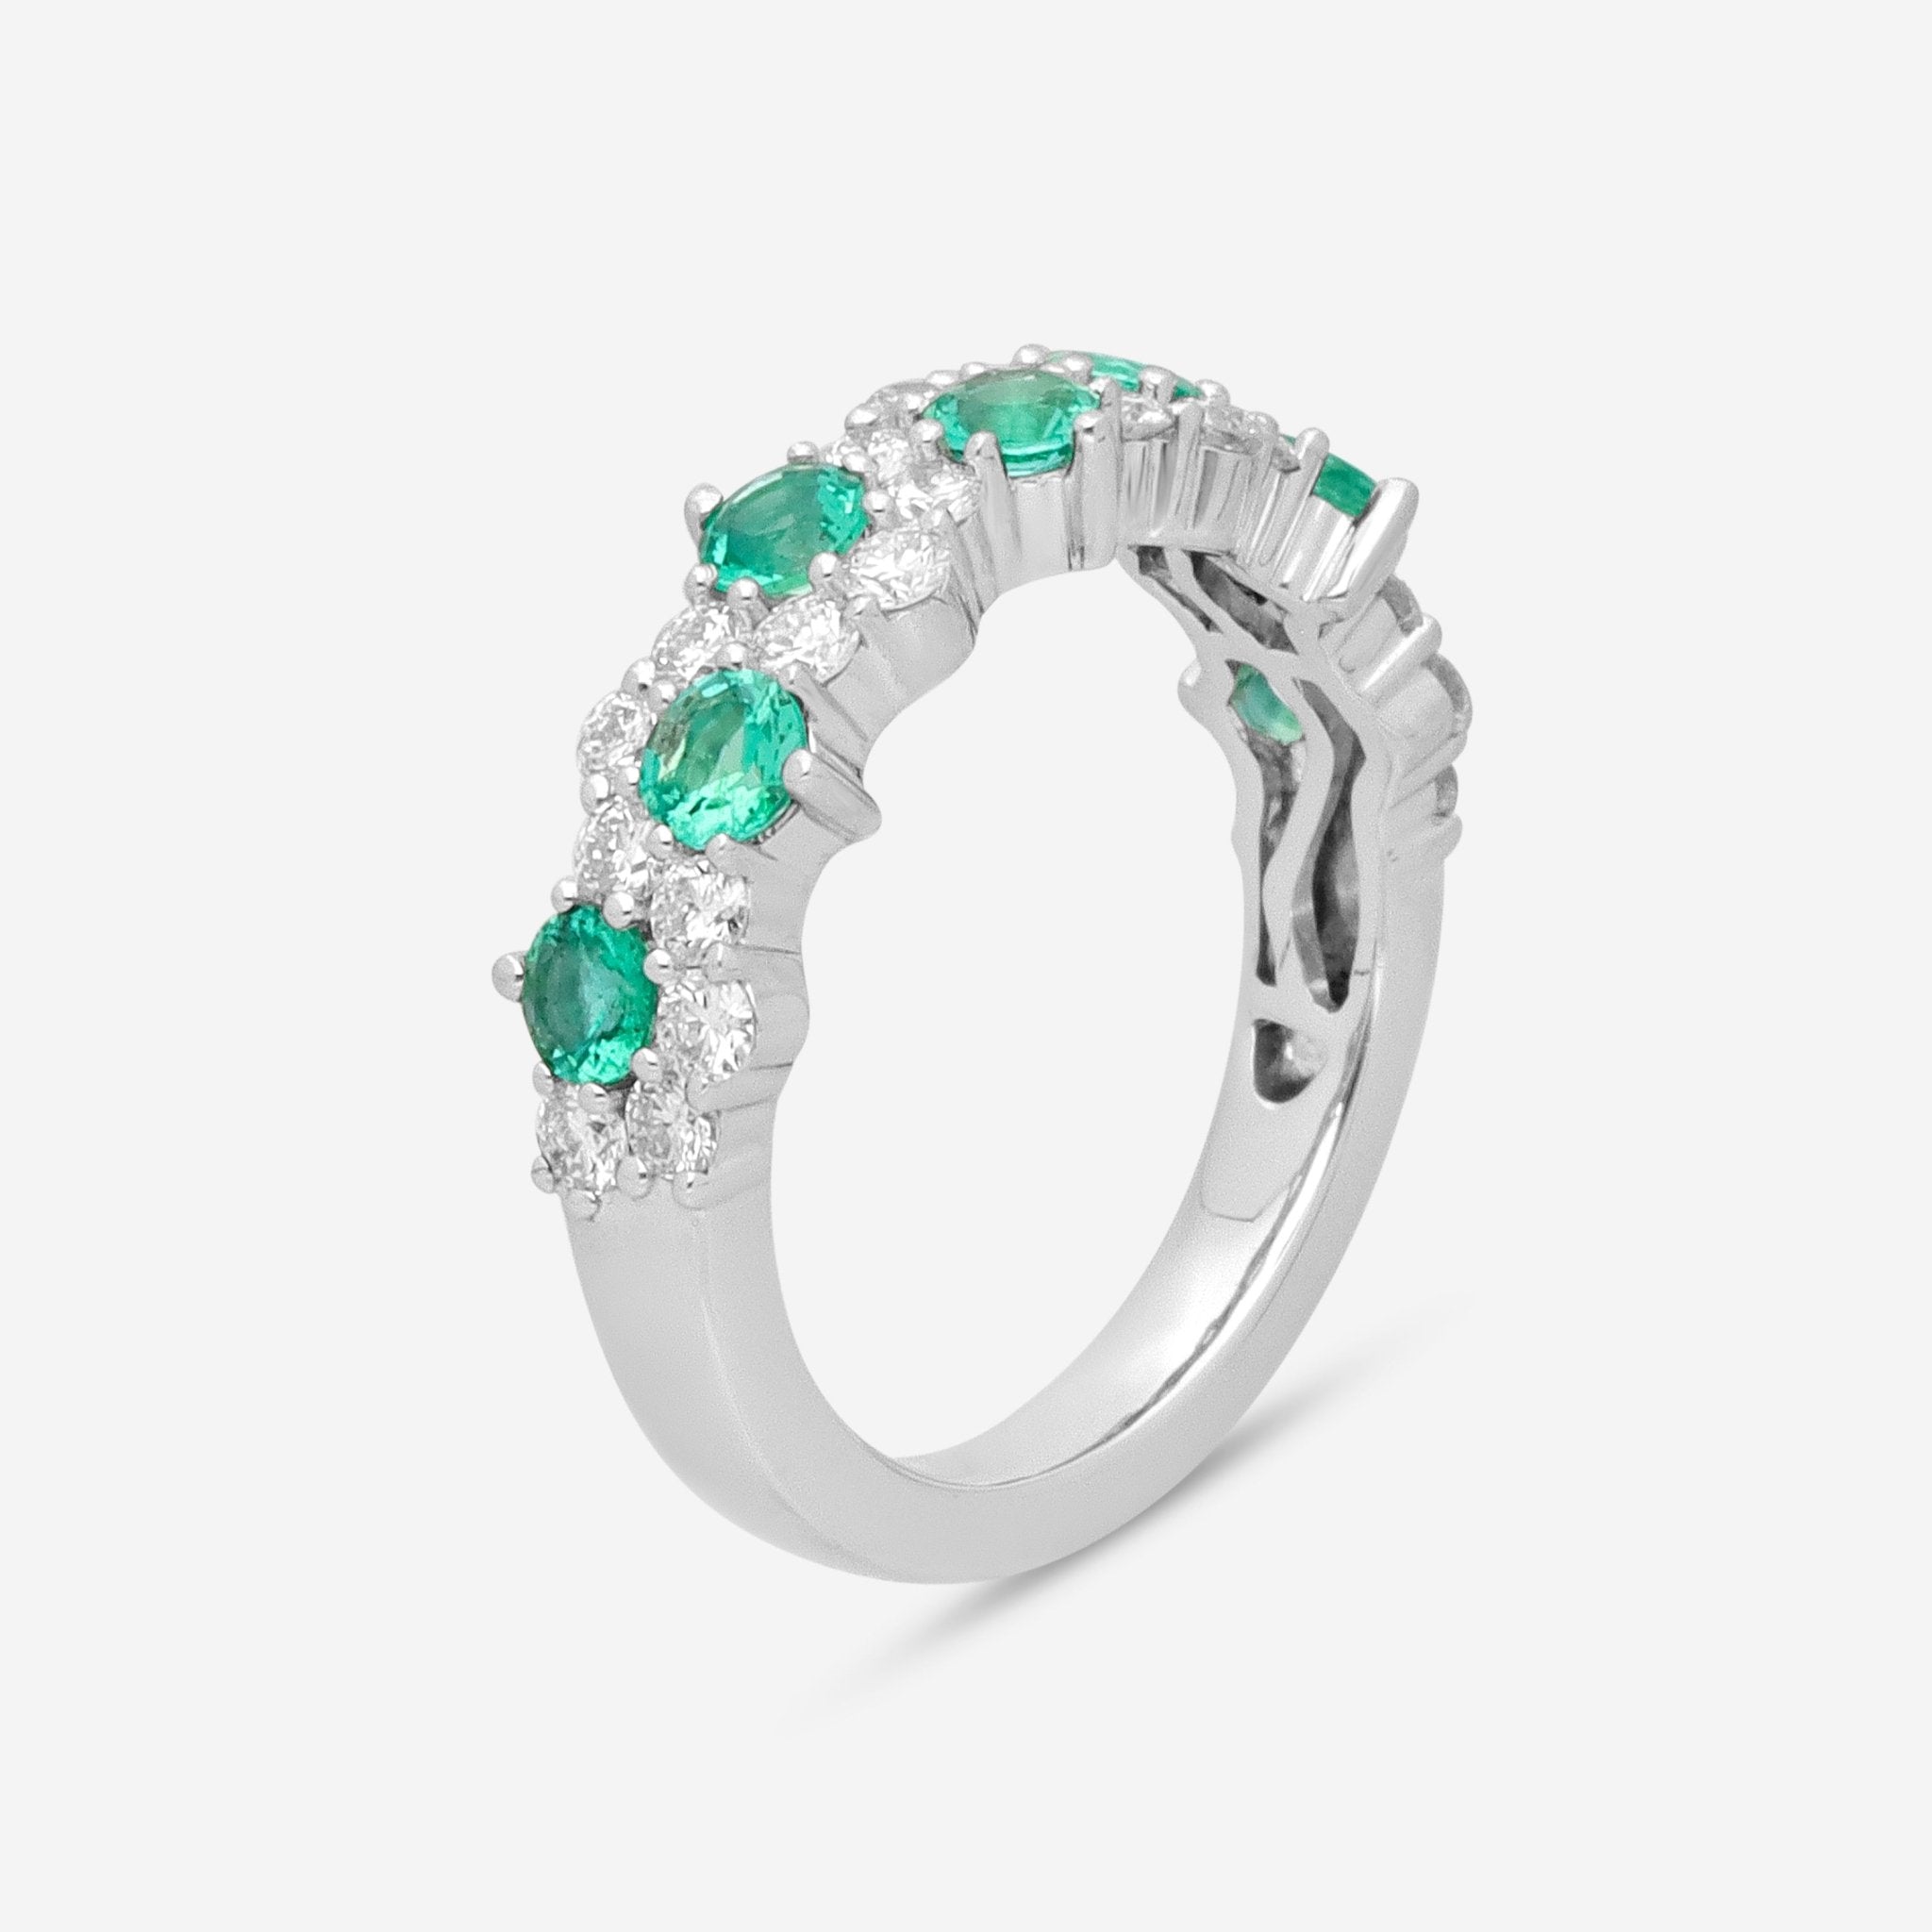 Ina Mar 14K White Gold Emerald & Diamond Ring ER - 071295 - EMD - THE SOLIST - Ina Mar